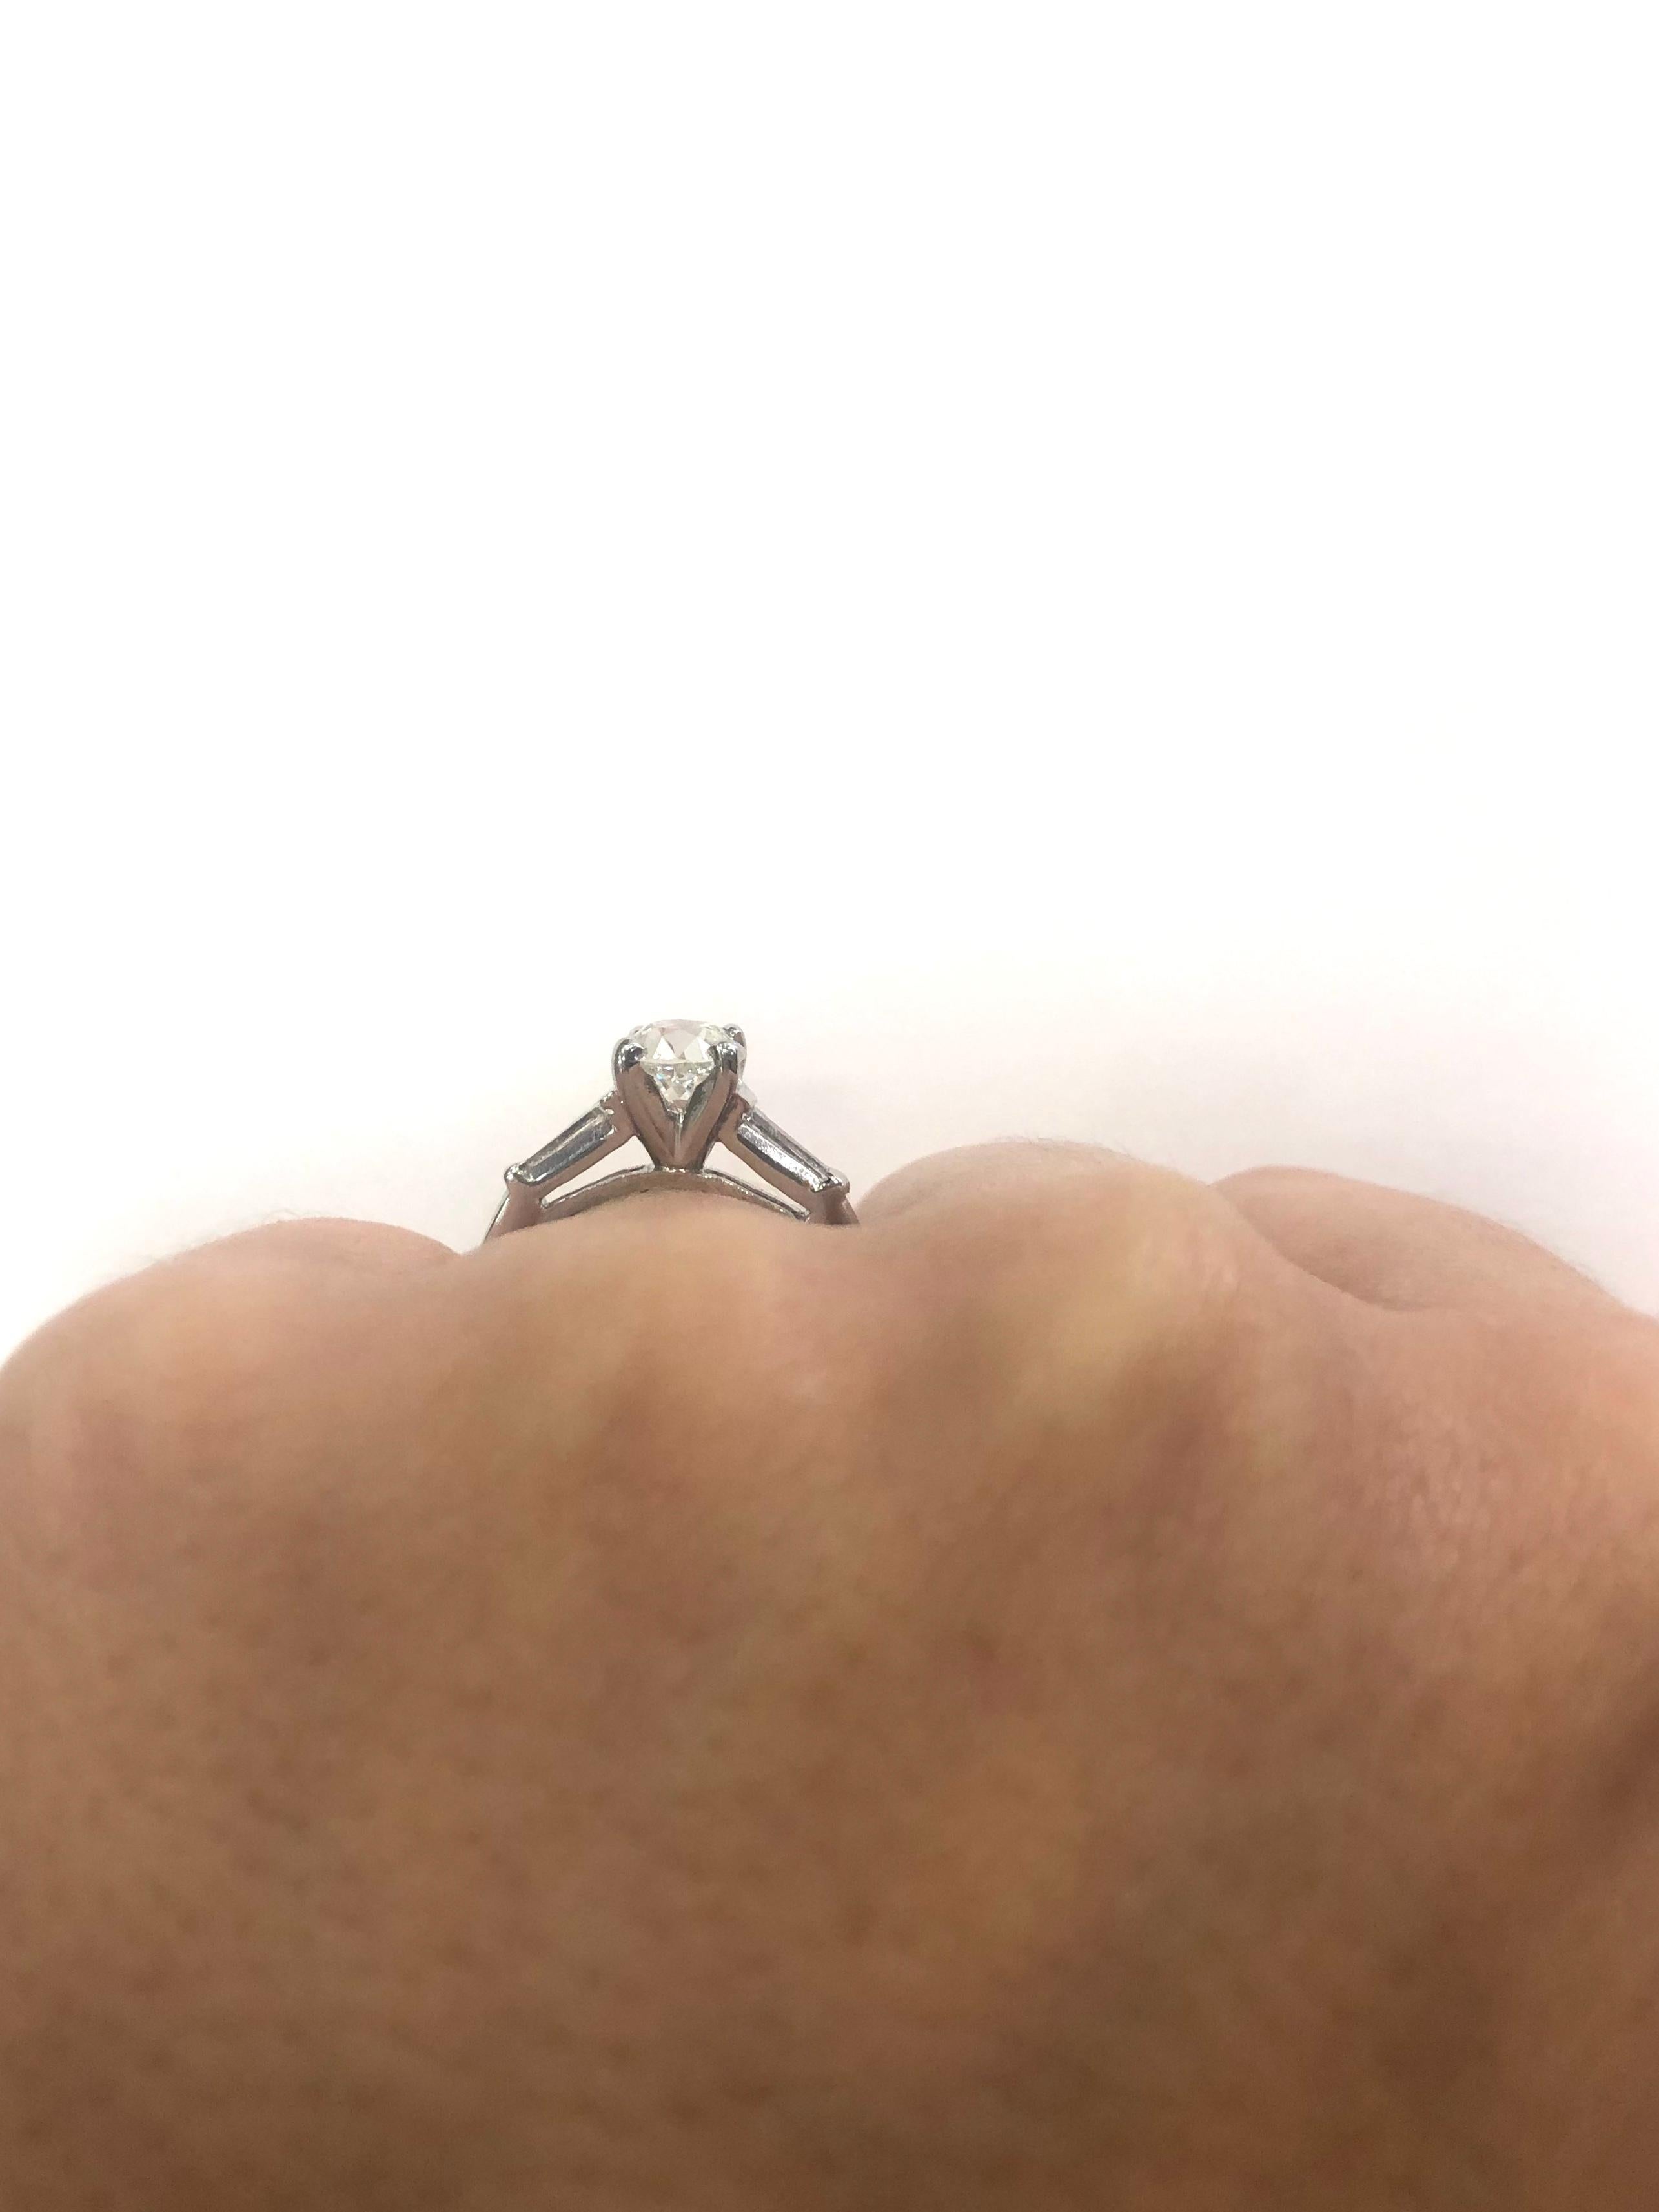 Baguette Cut Single Stone Diamond Engagement Ring 1.01 Carat Certified Diamond Platinum For Sale